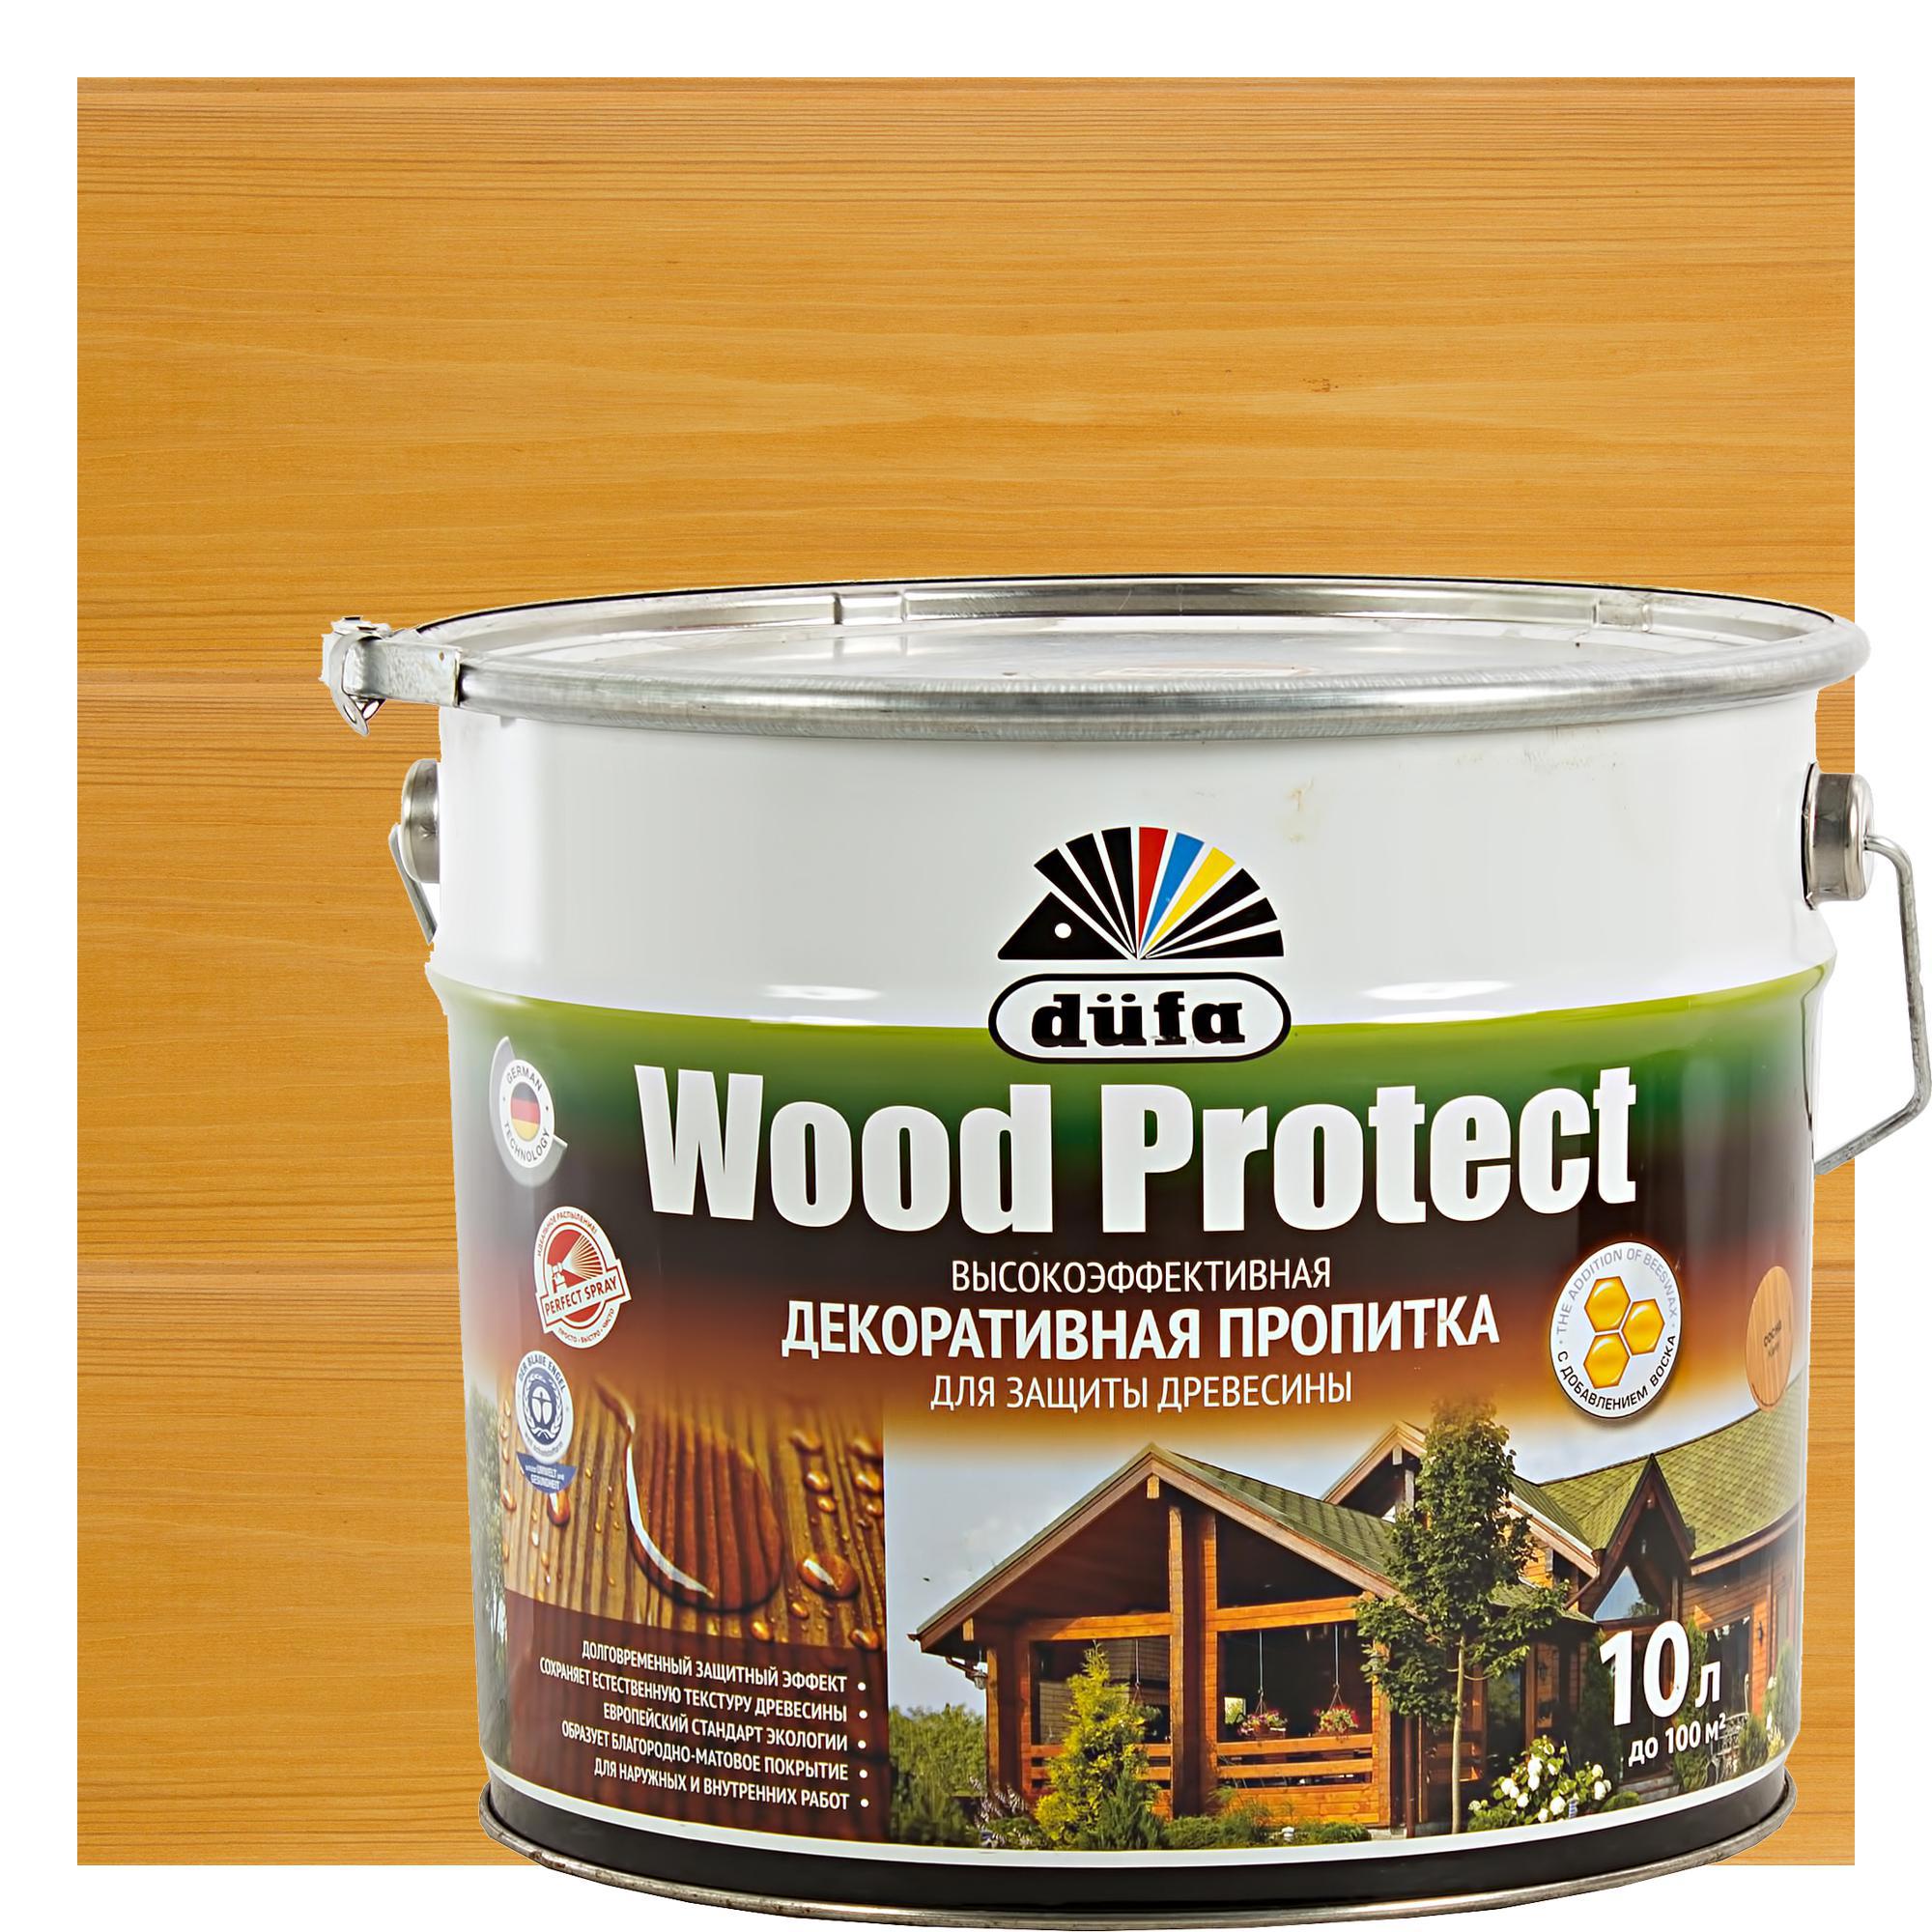 Dufa Wood protect тик